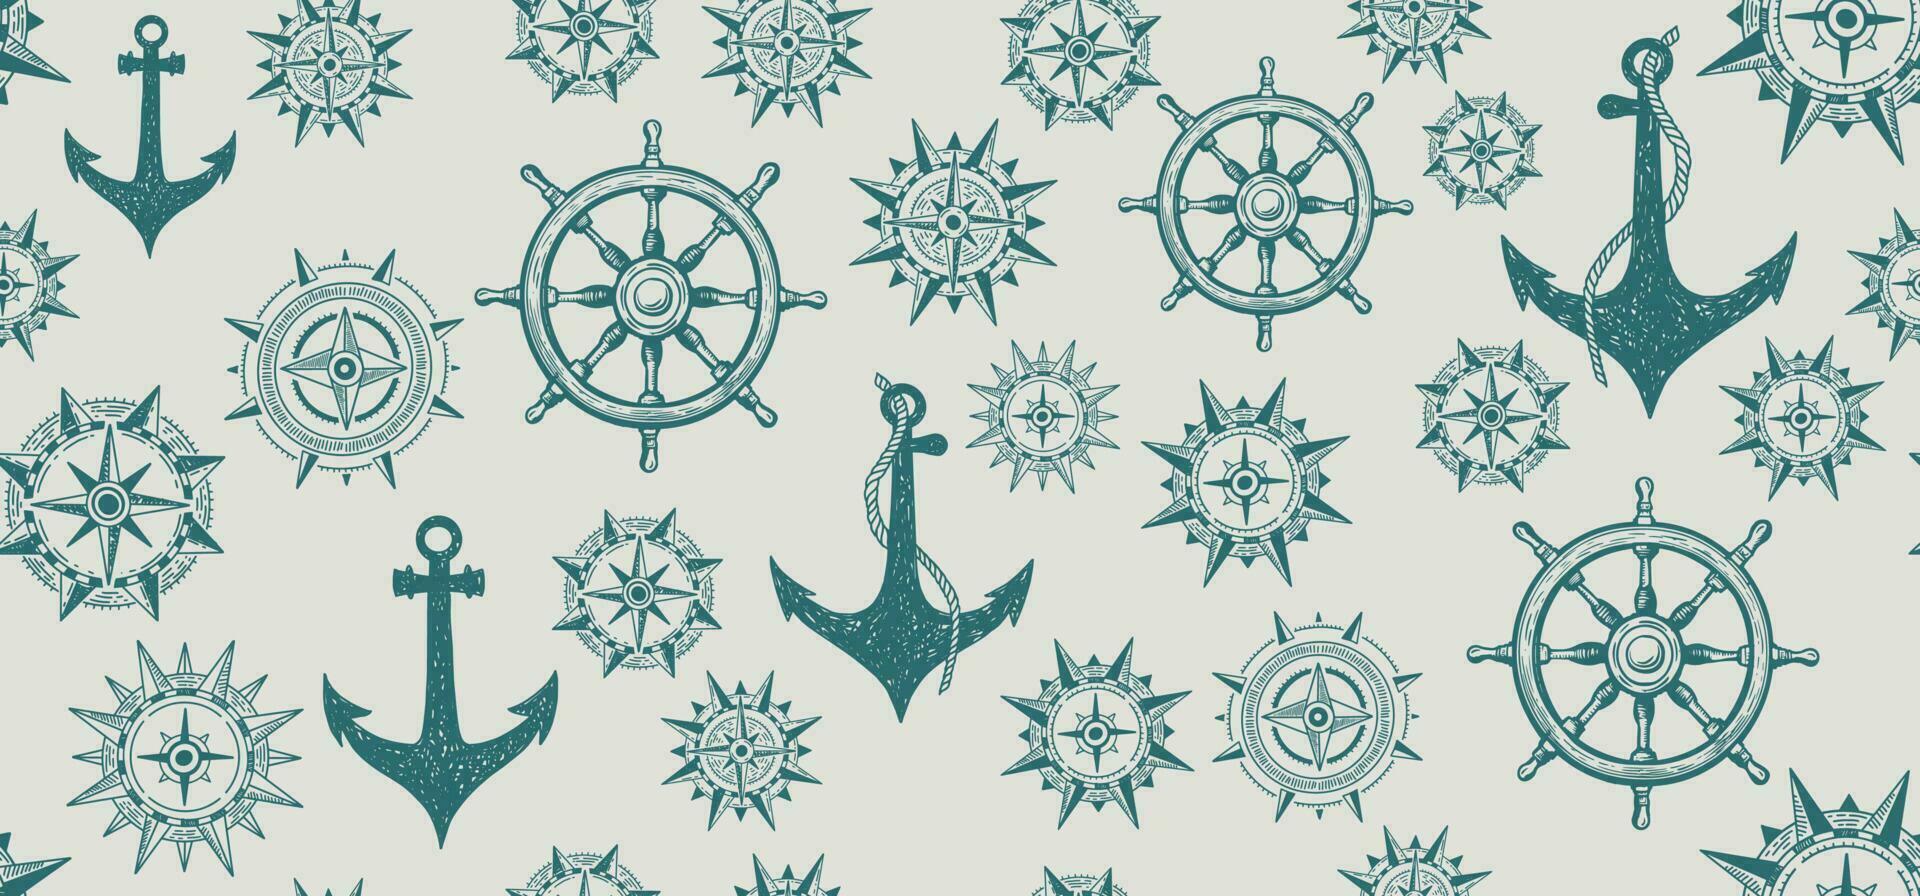 Compass Wind rose, Anchor, Ship wheel, pattern, hand drawn Illustration. vector